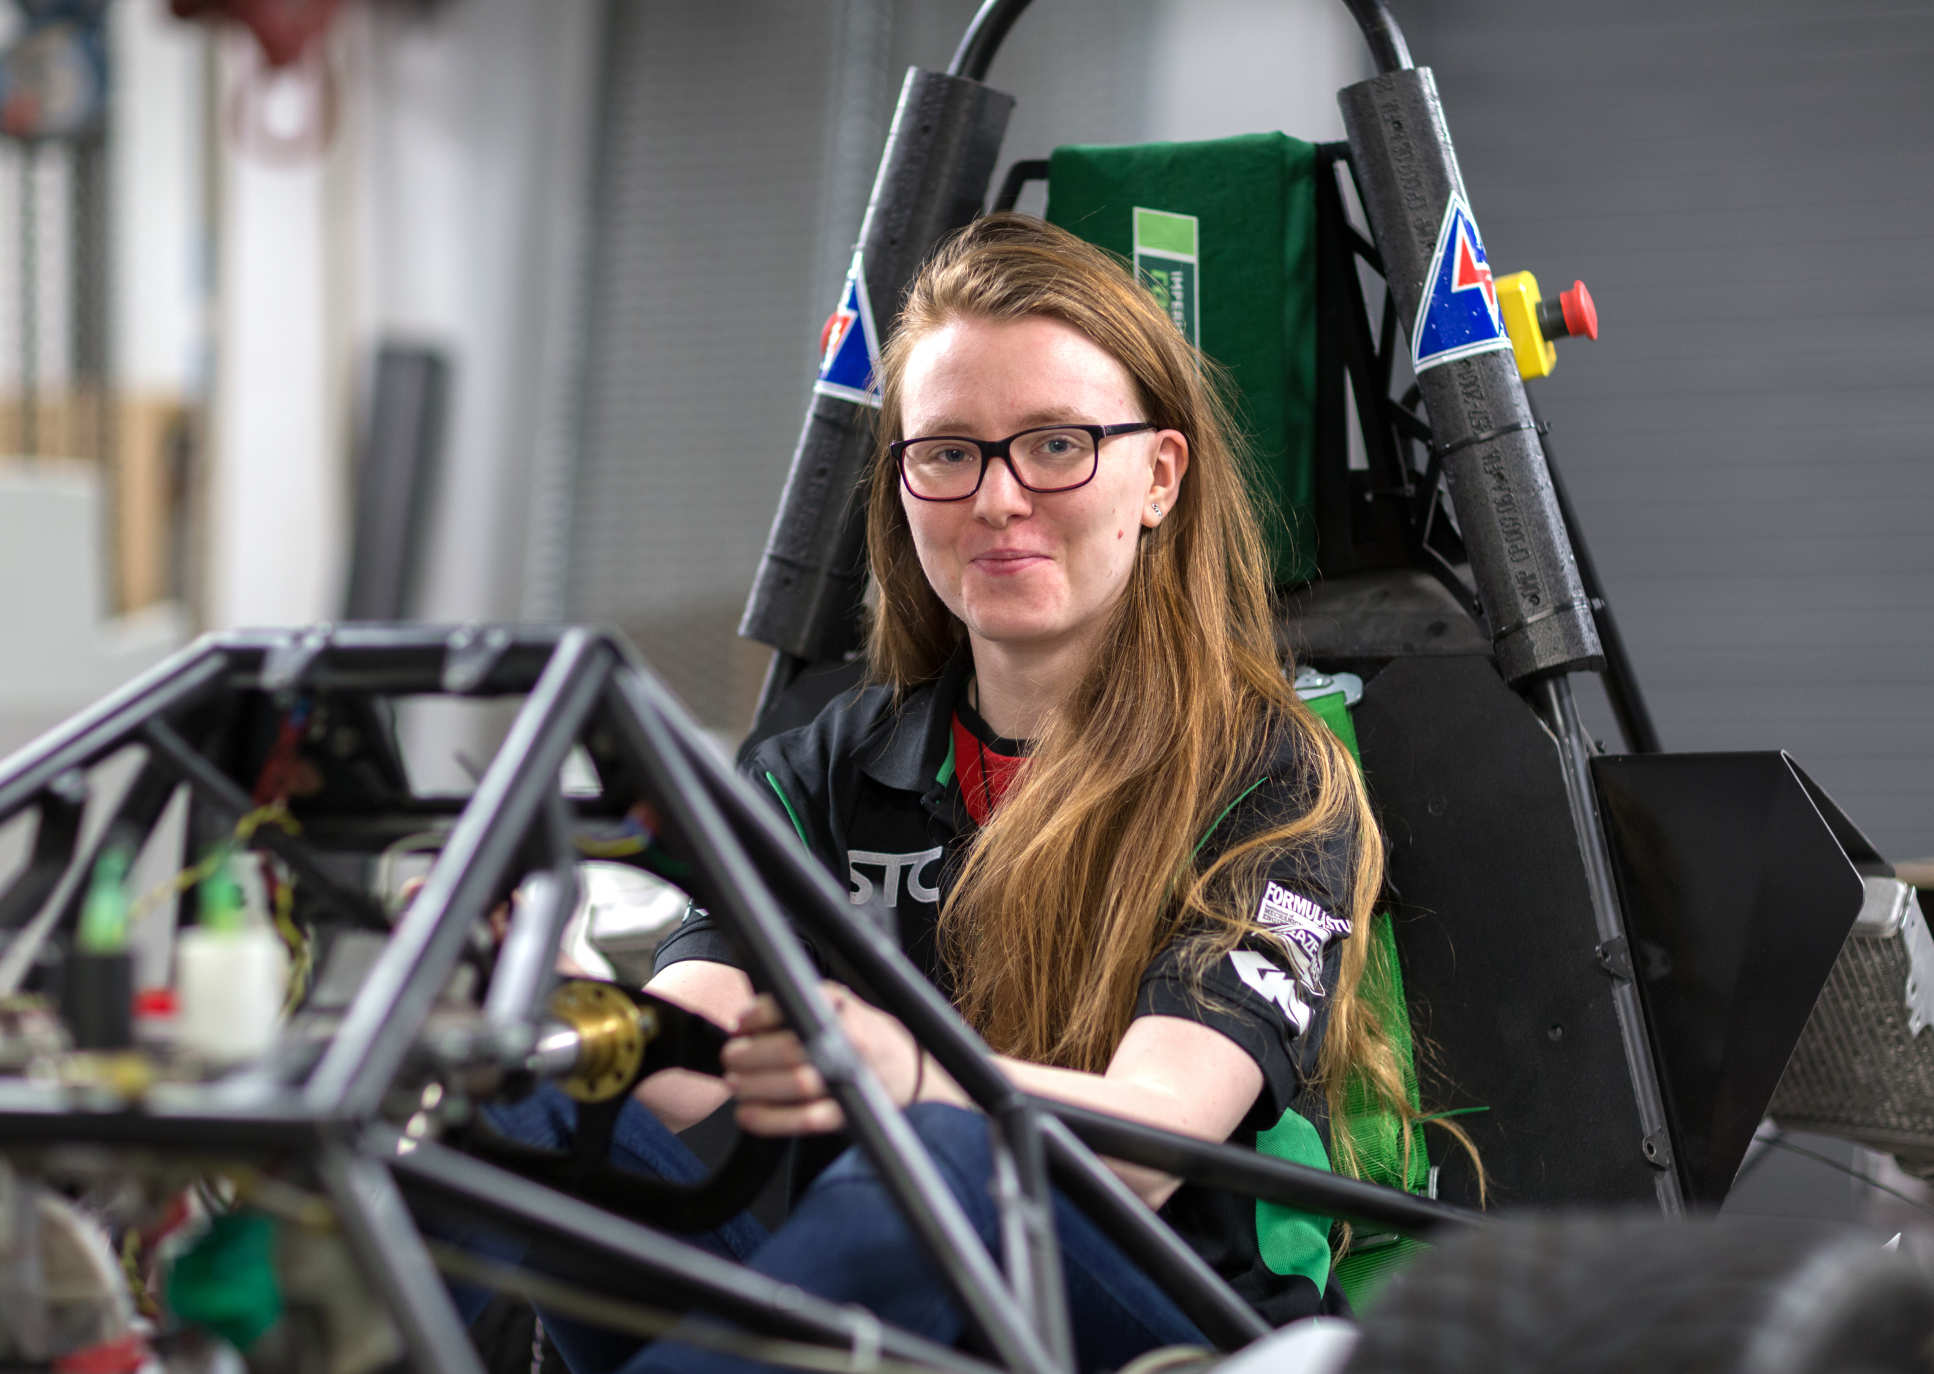 Female student sat in a formula racing car